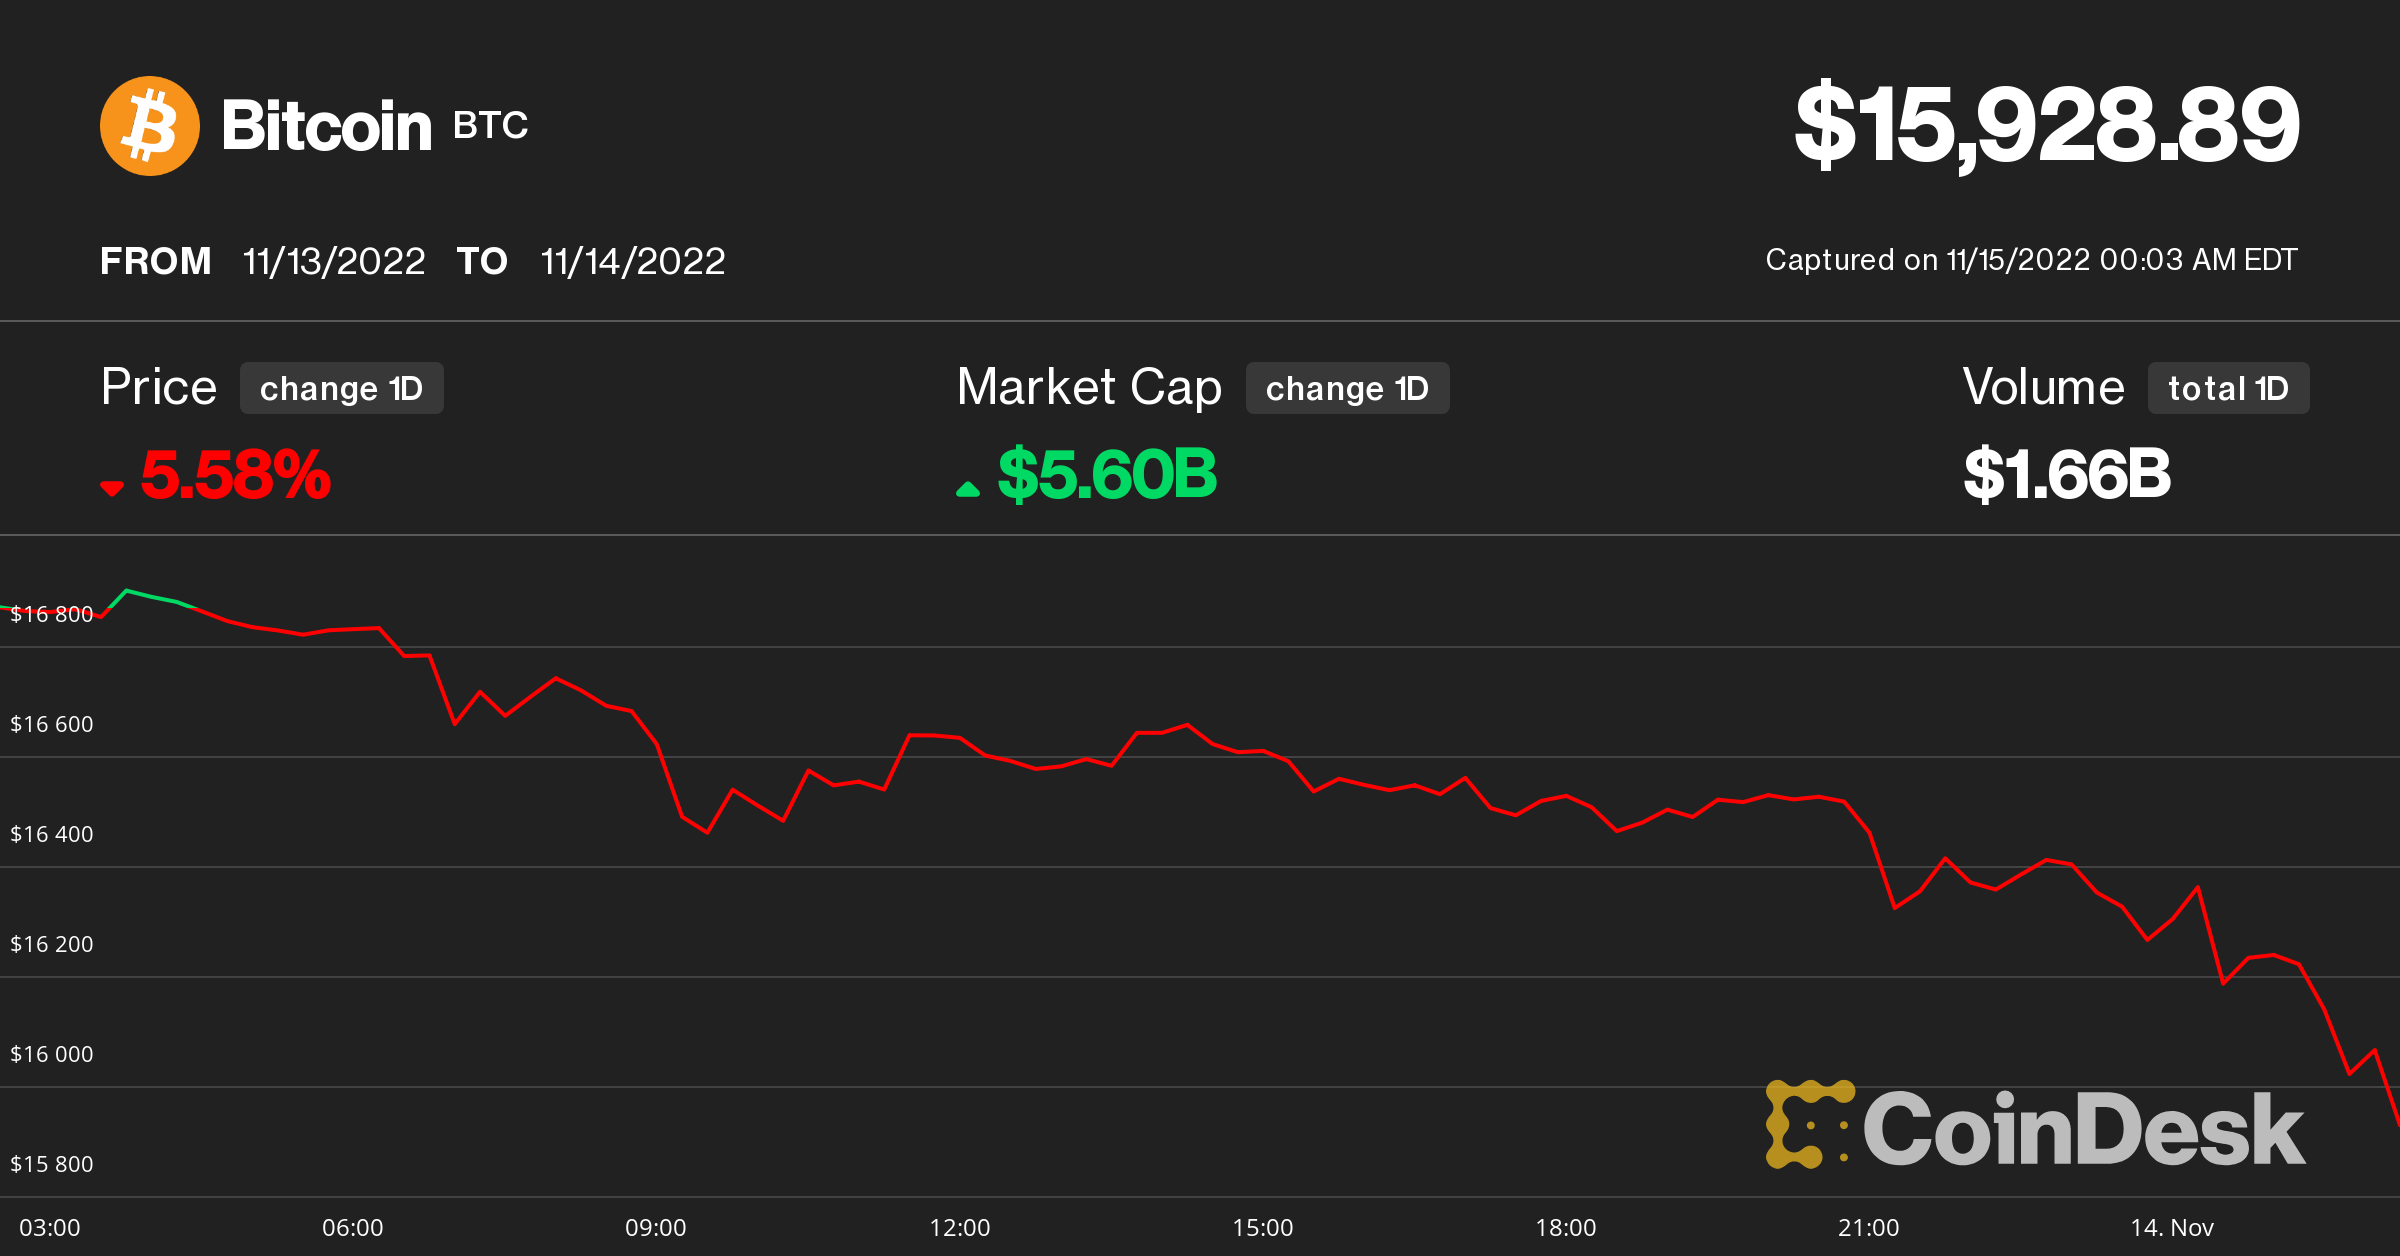 Bitcoin Price: BTC for UTC period [11/13/2022 02:16 - 11/14/2022 02:16]